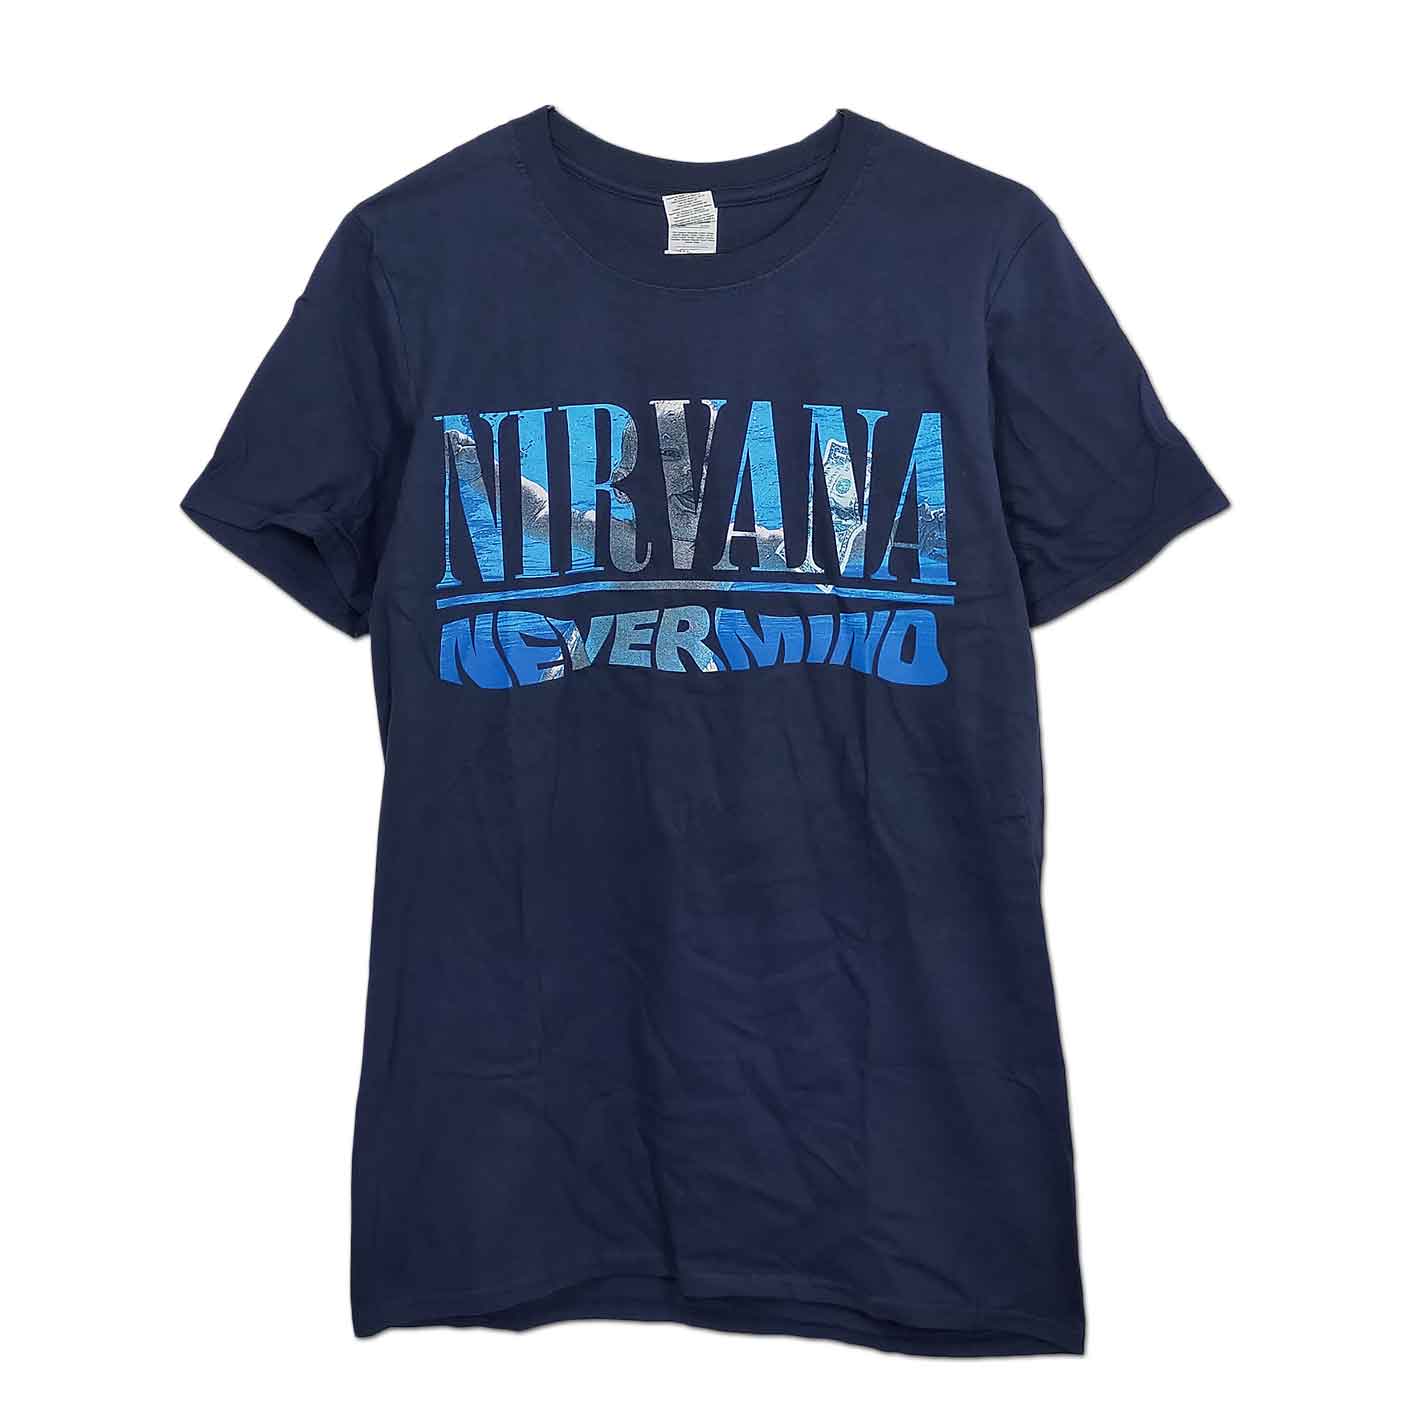 Tシャツ　Nirvana NEVERMINDNIRVANA